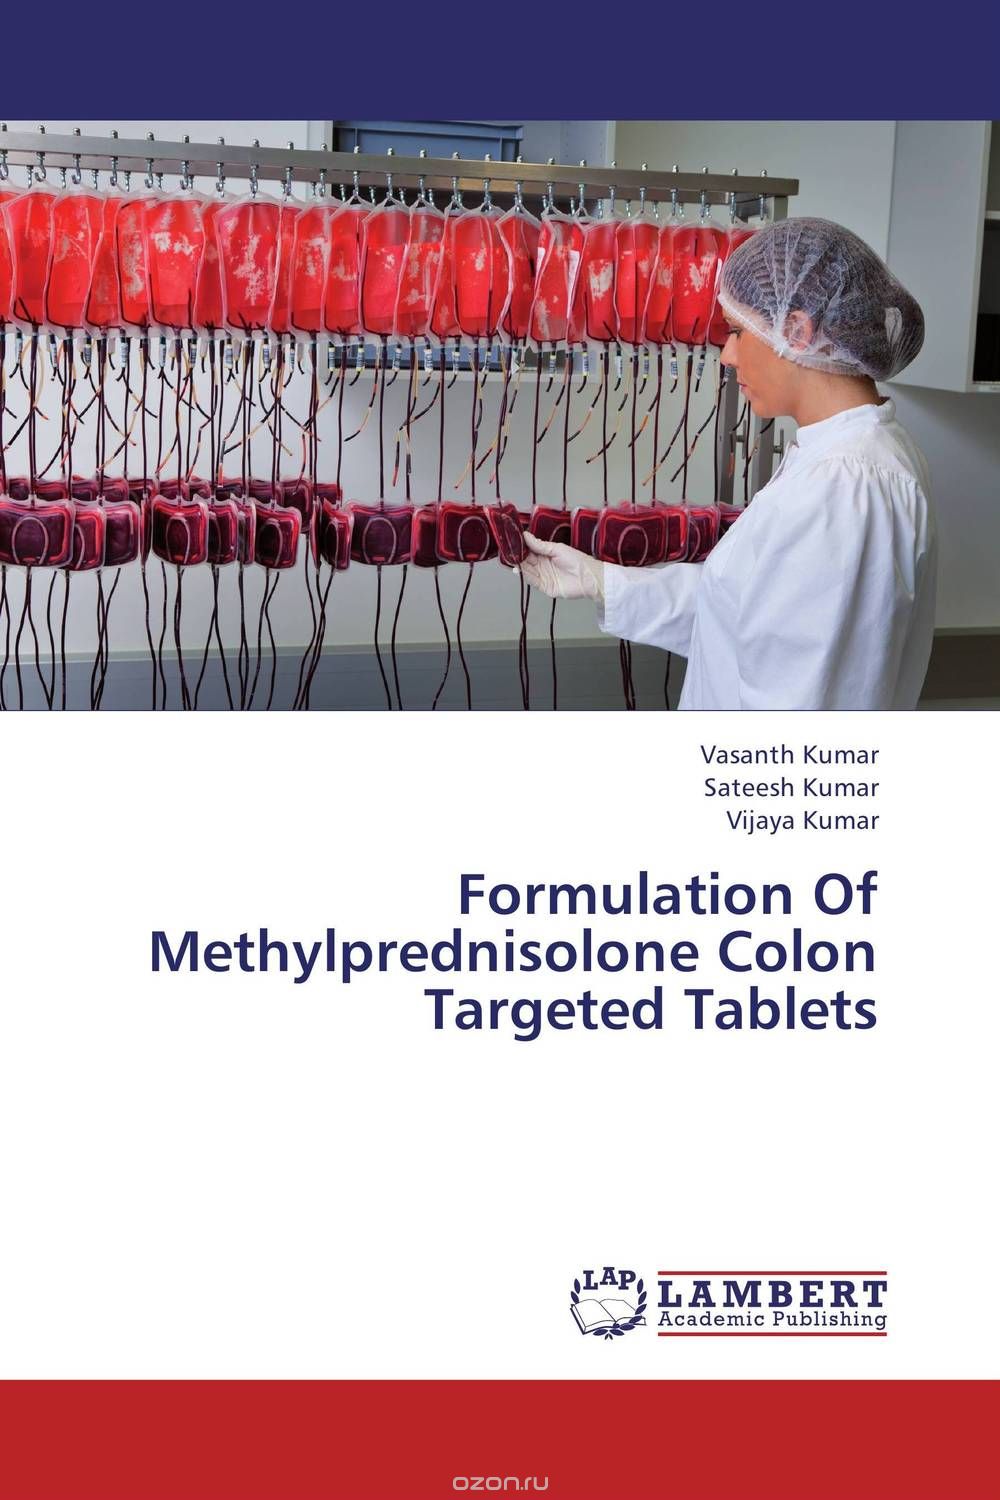 Скачать книгу "Formulation Of Methylprednisolone Colon Targeted Tablets"